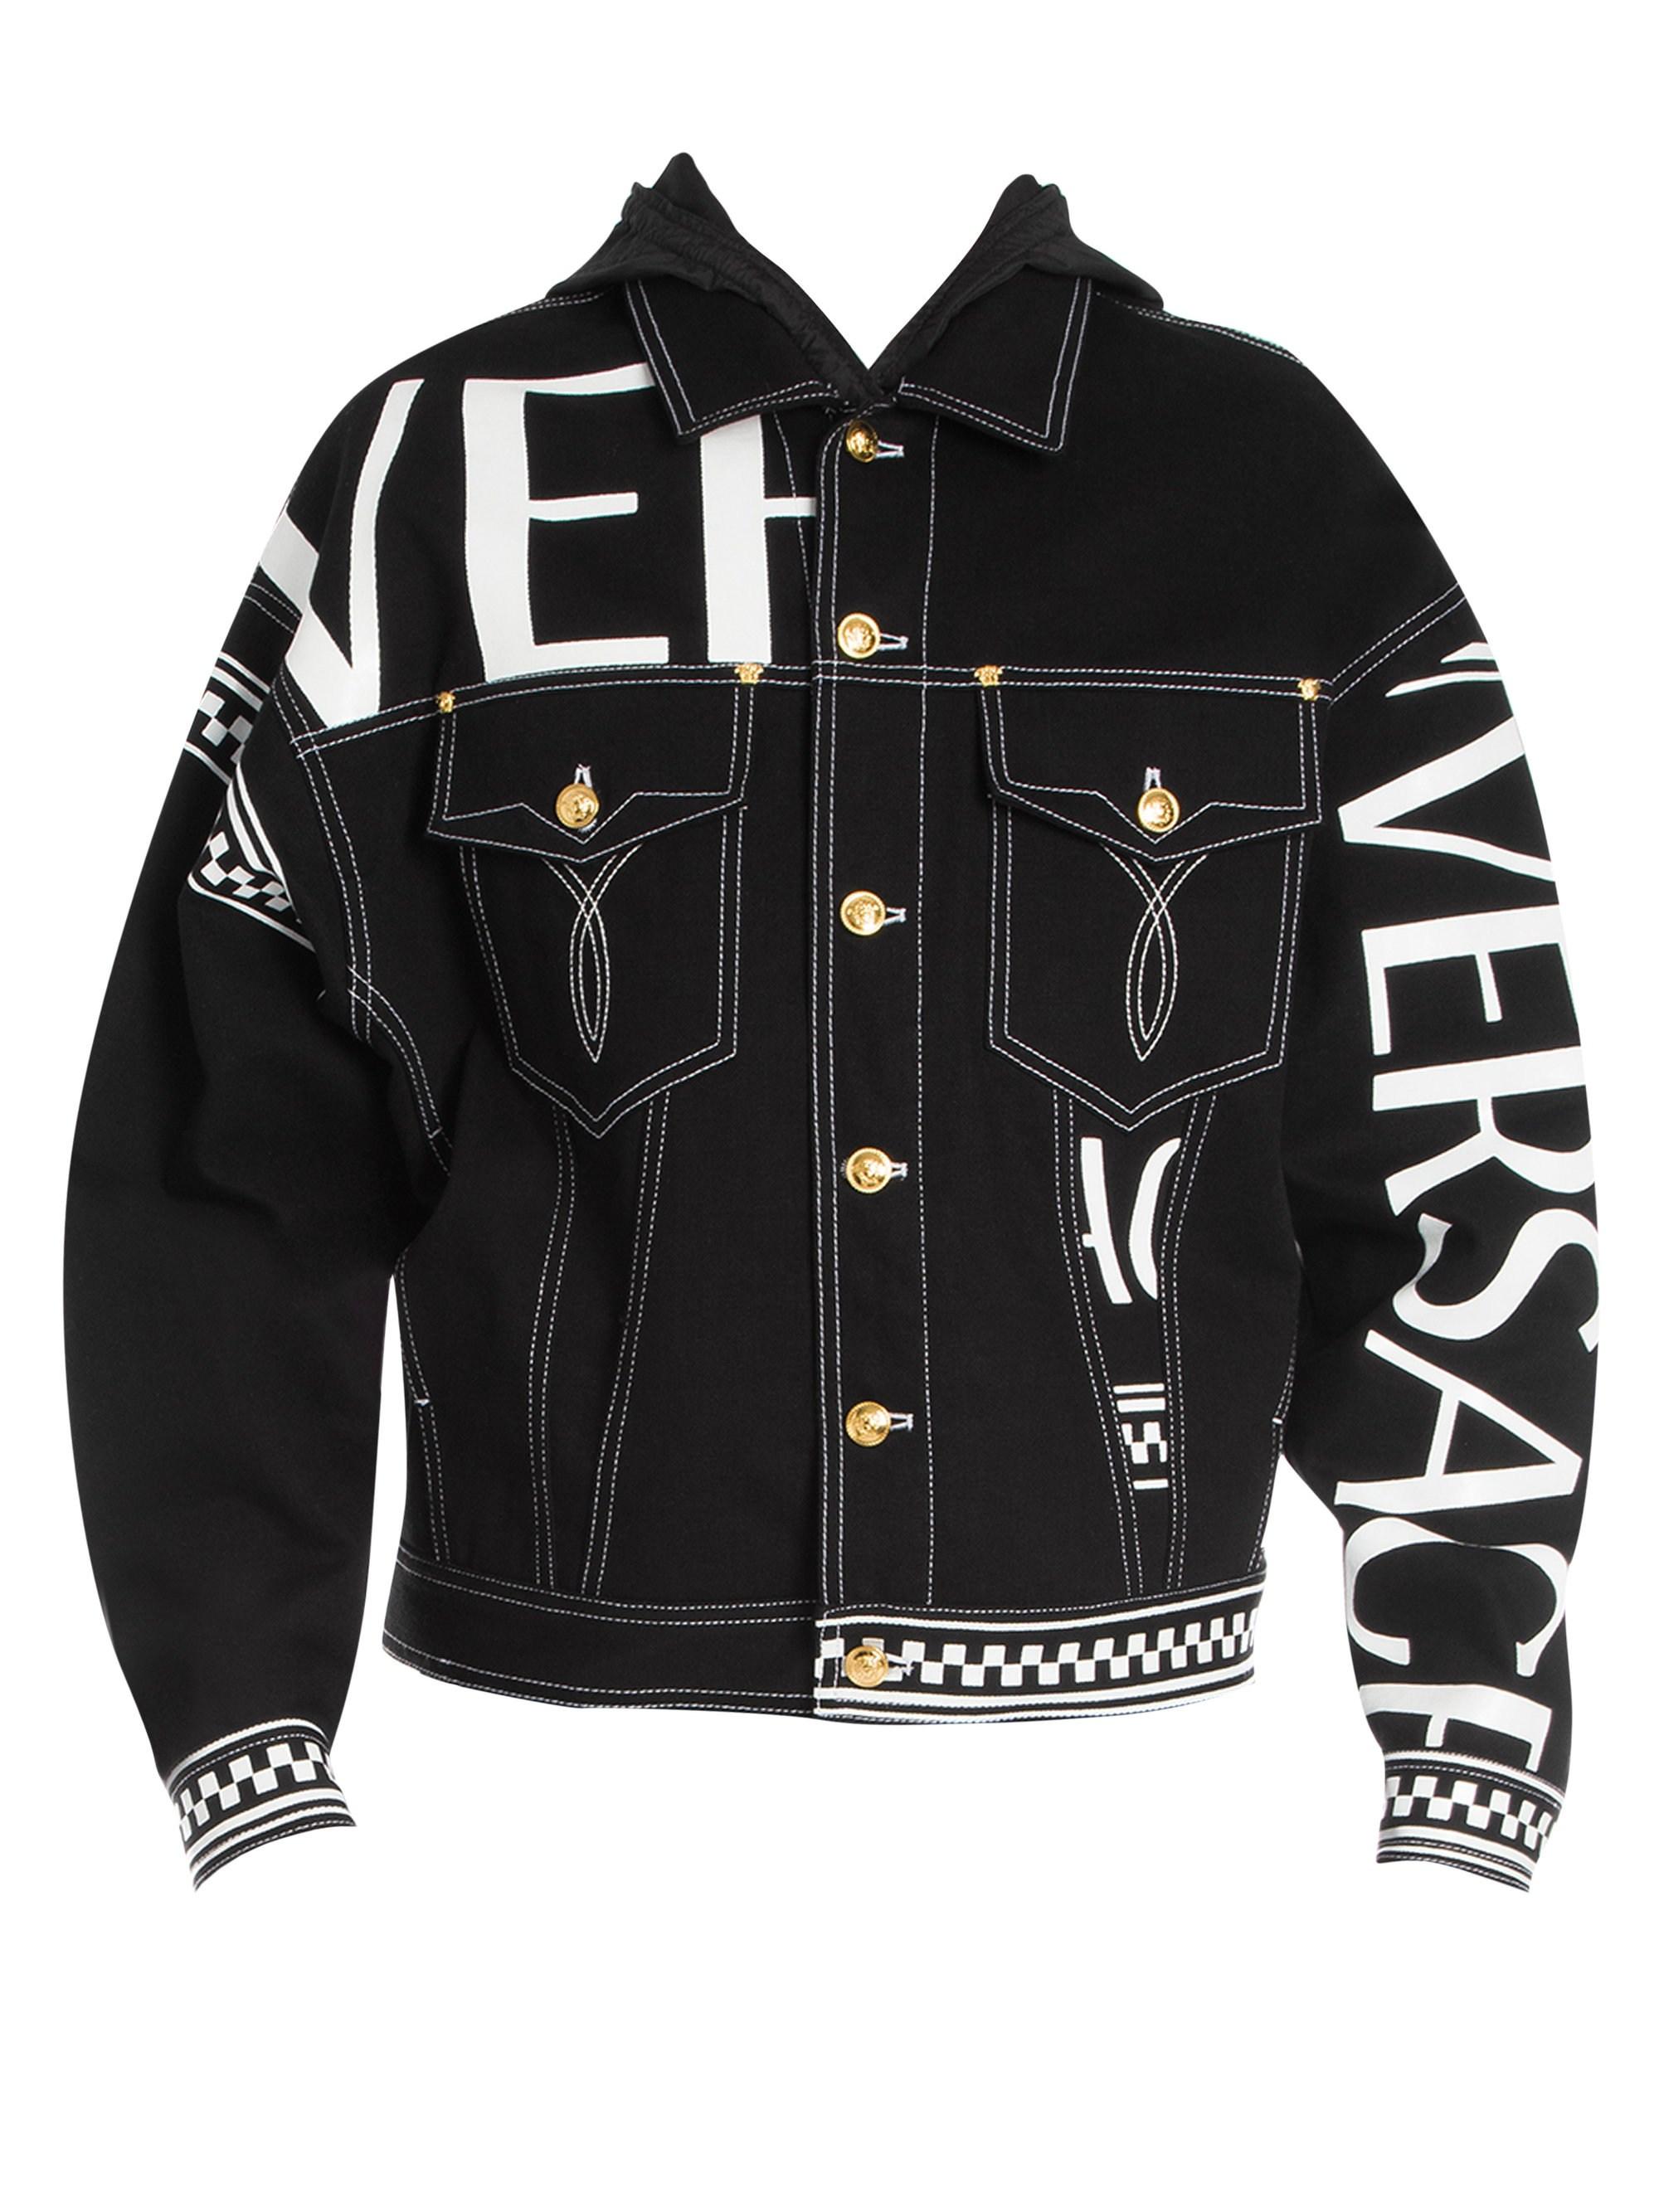 Versace Logo Check Print Denim Jacket in Black for Men - Lyst